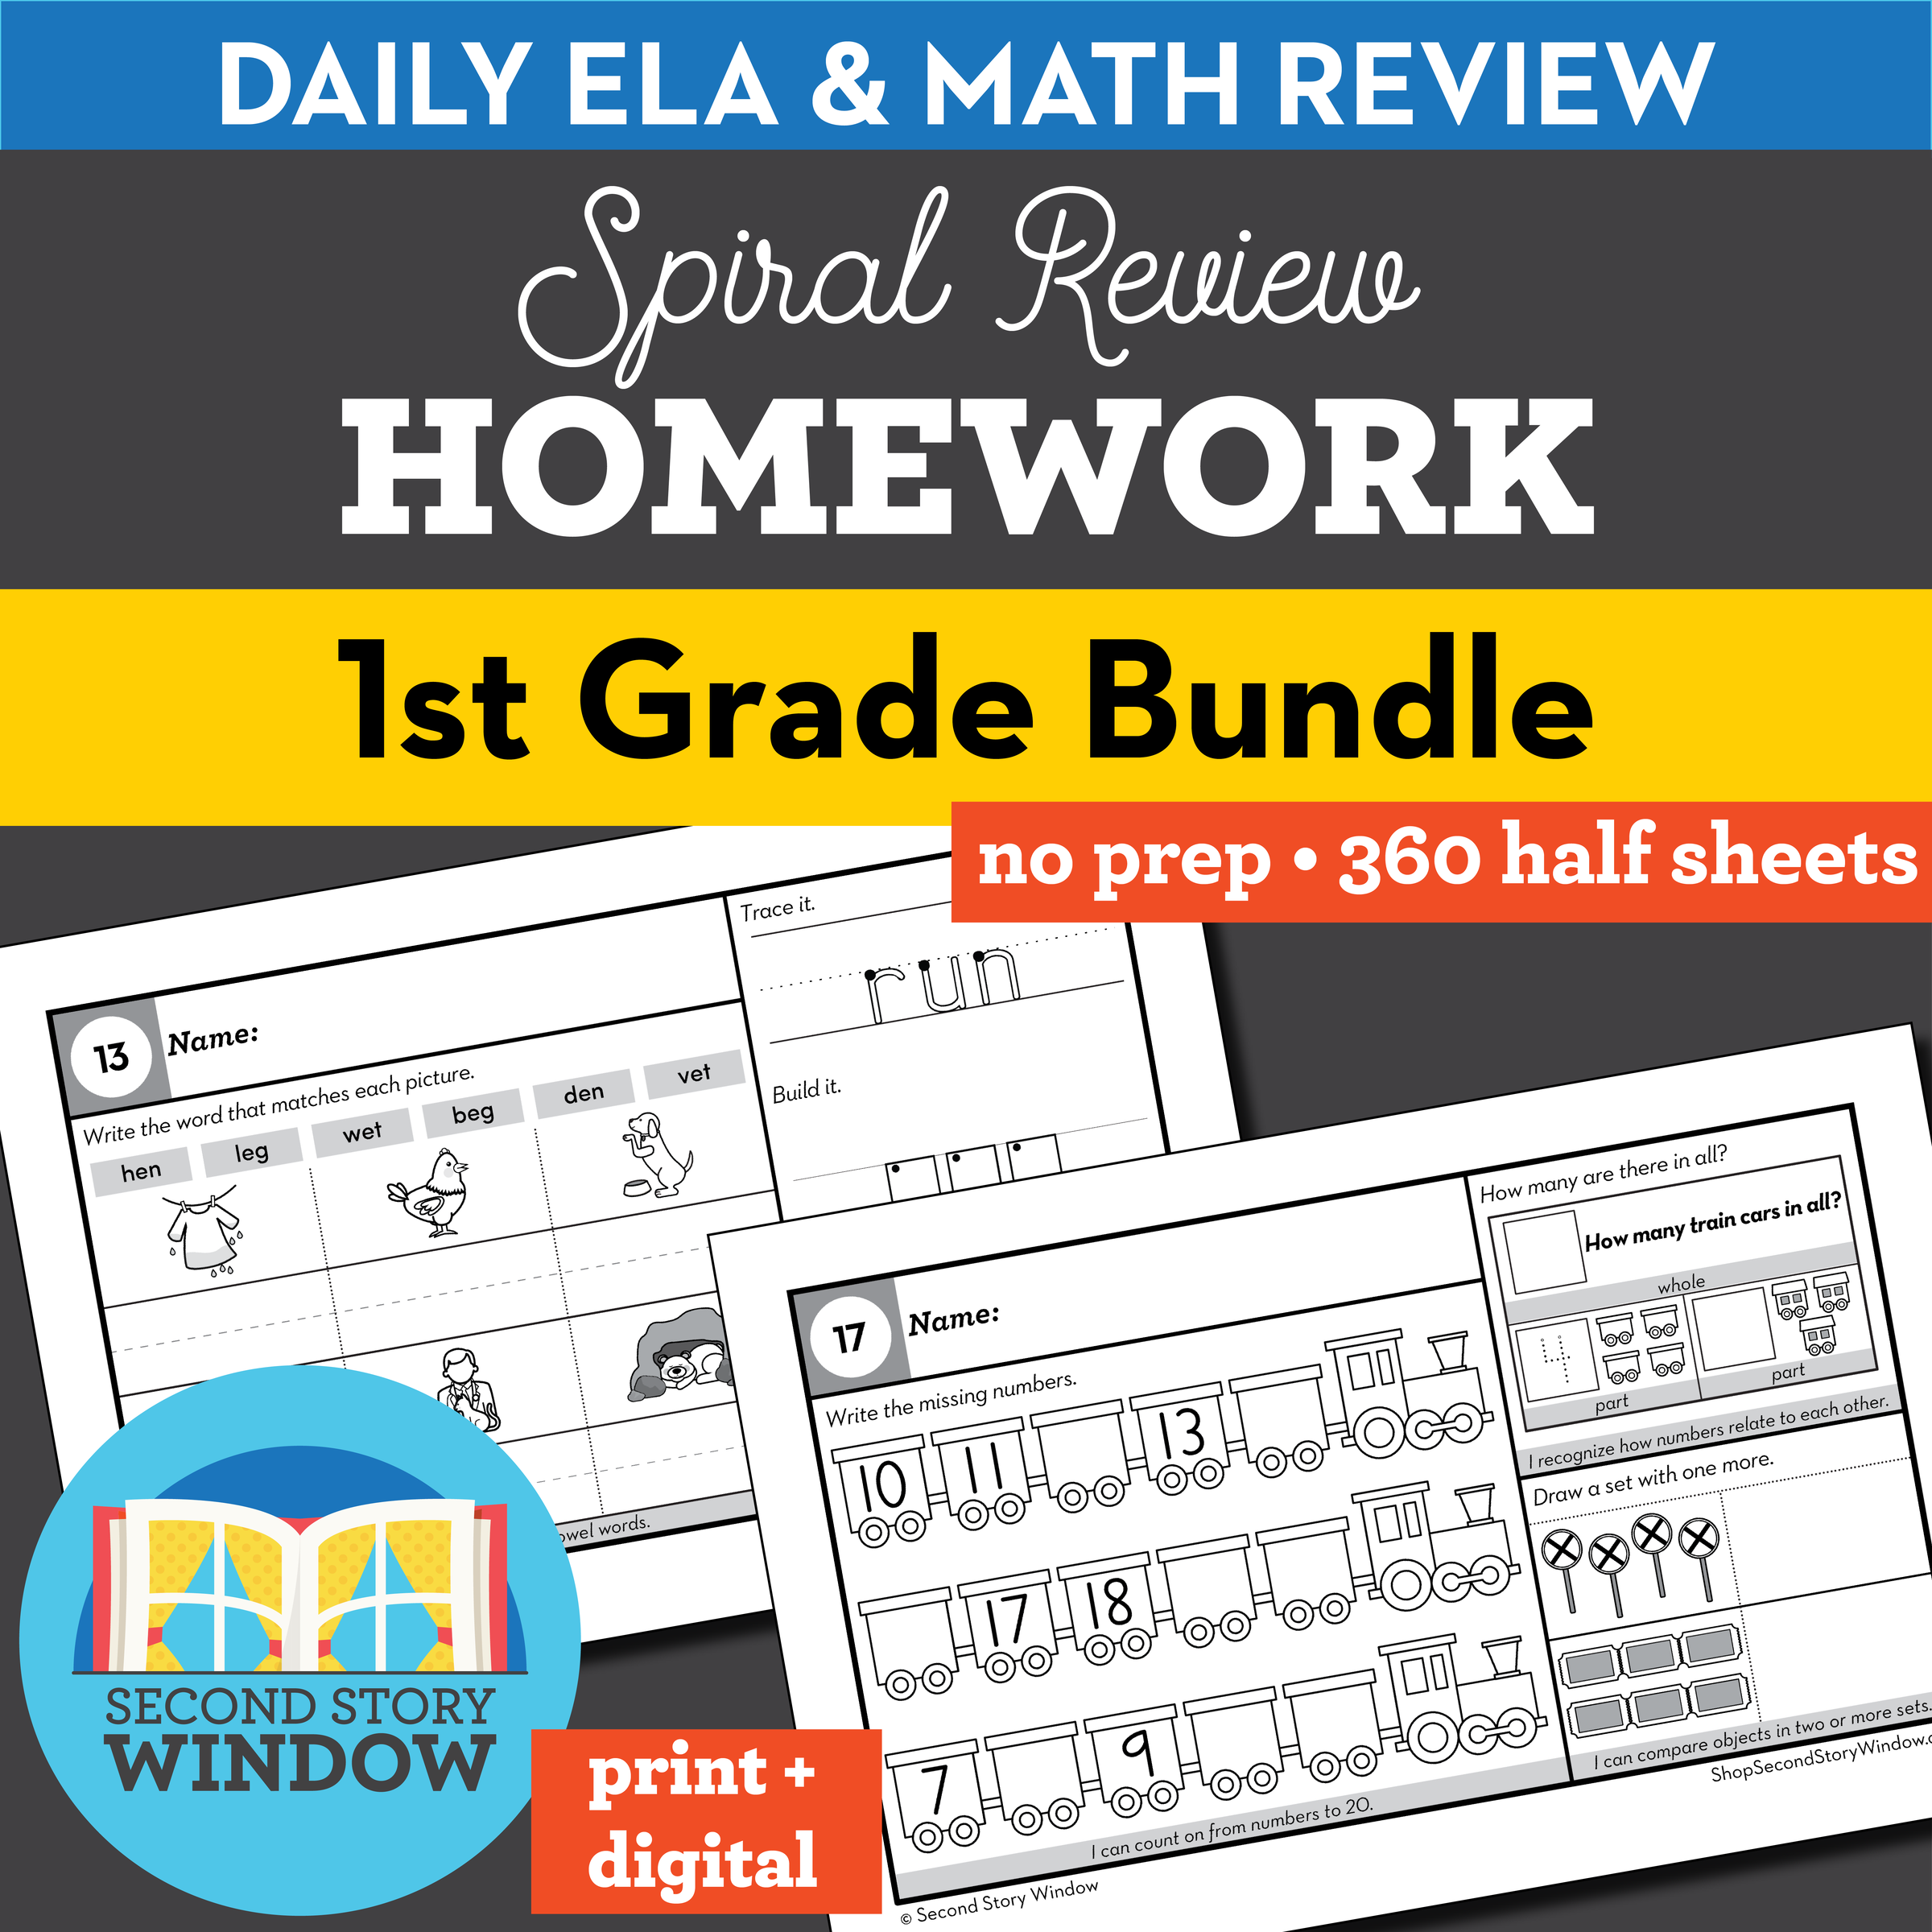 homework review 1 w10